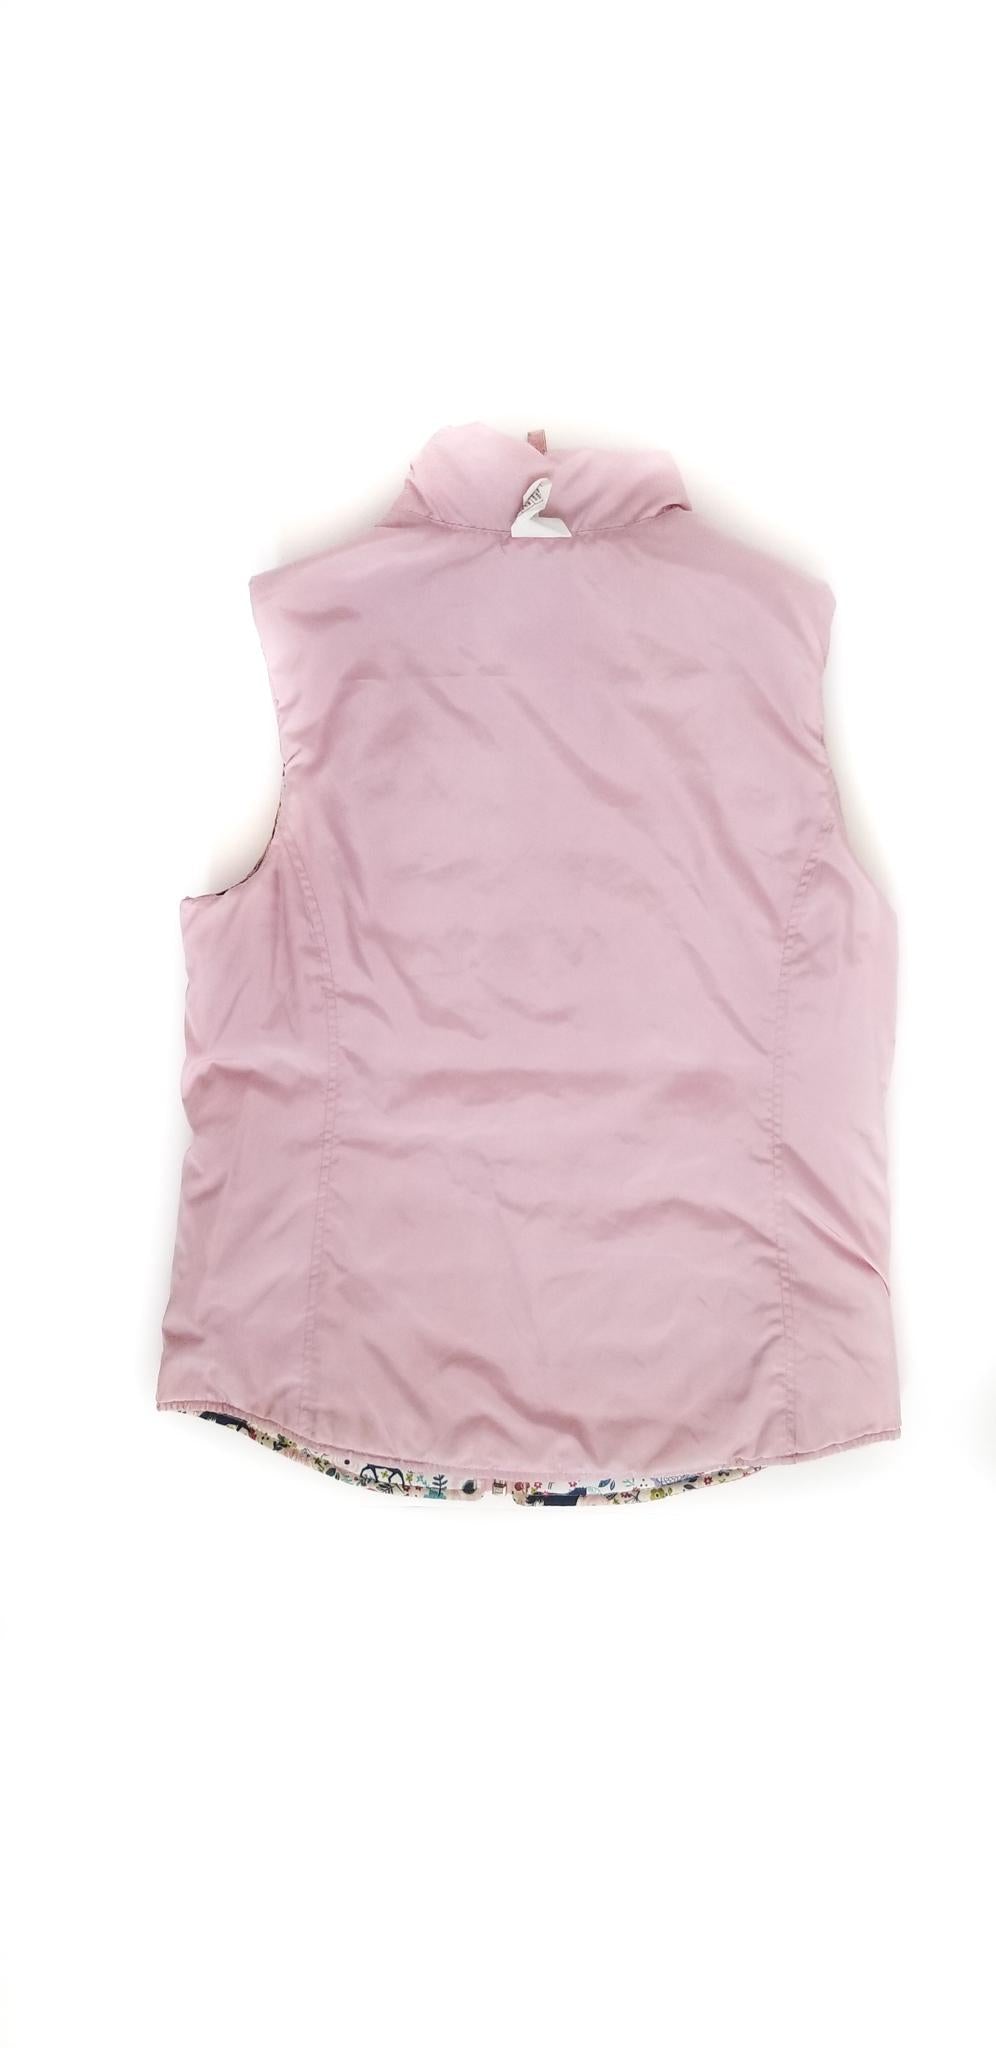 Ariat Kids Reversible Vest - Pink - Youth Medium